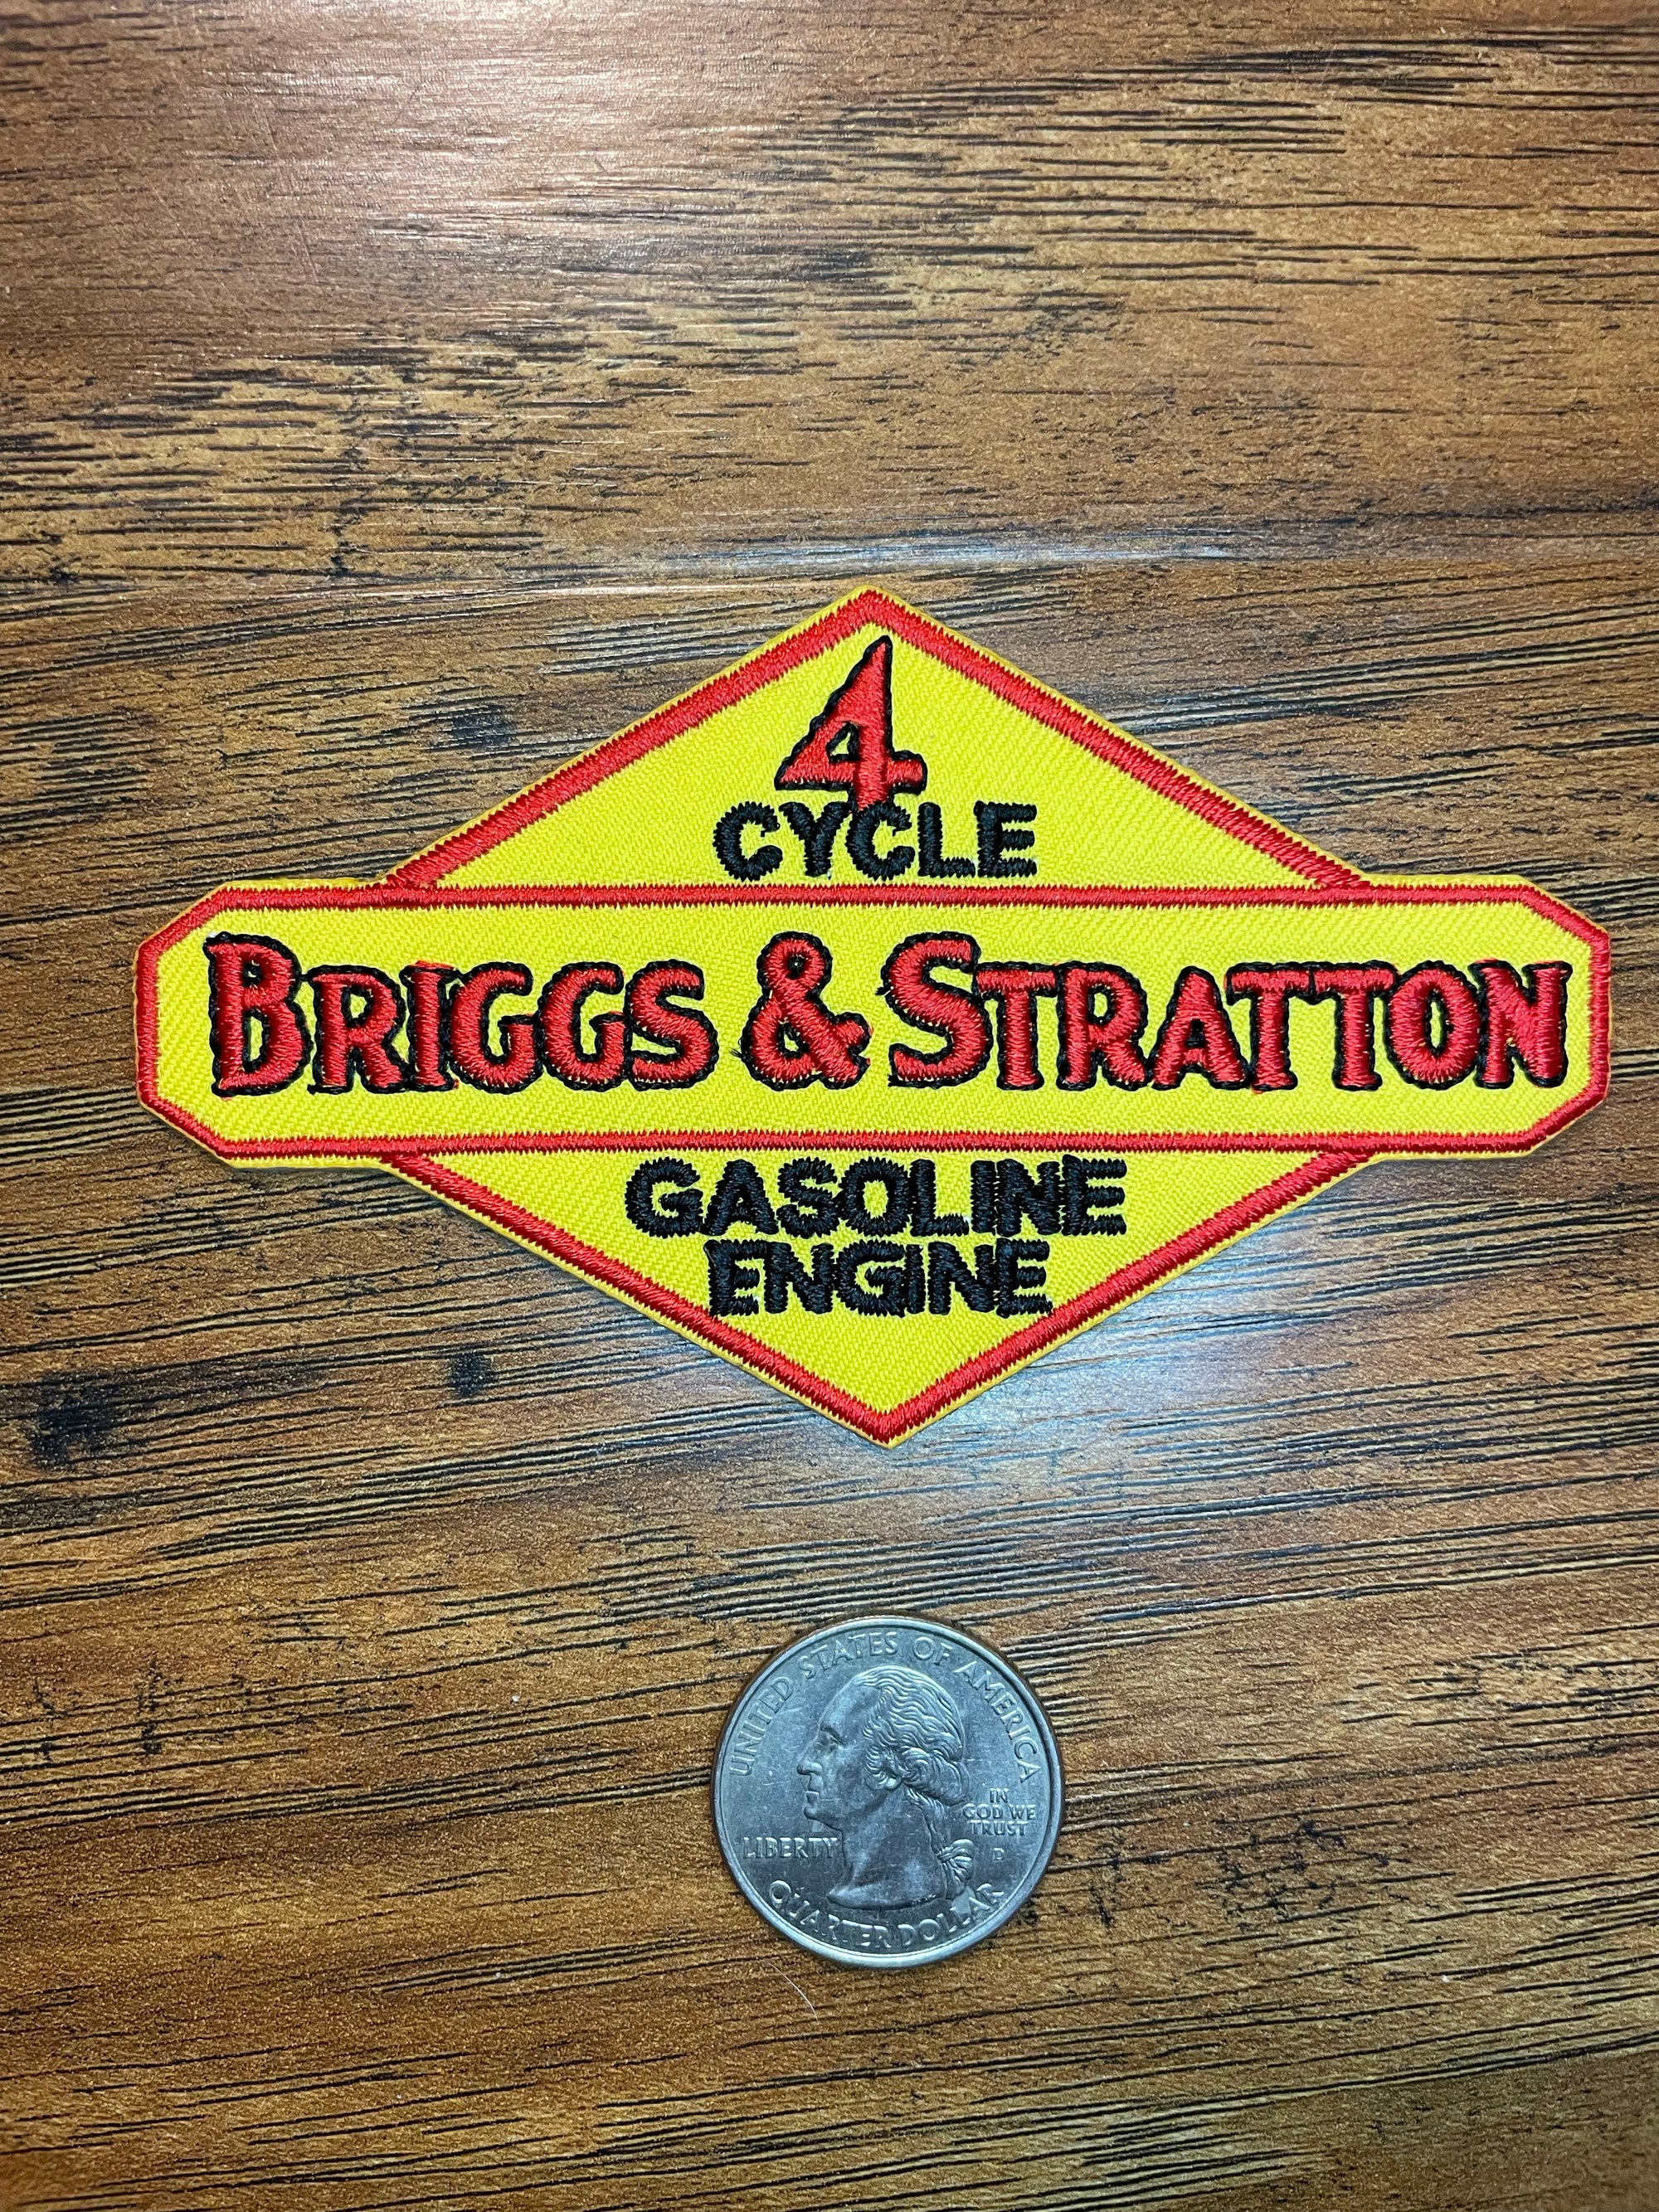 4 Cycle Briggs & Stratton Gasoline Engine